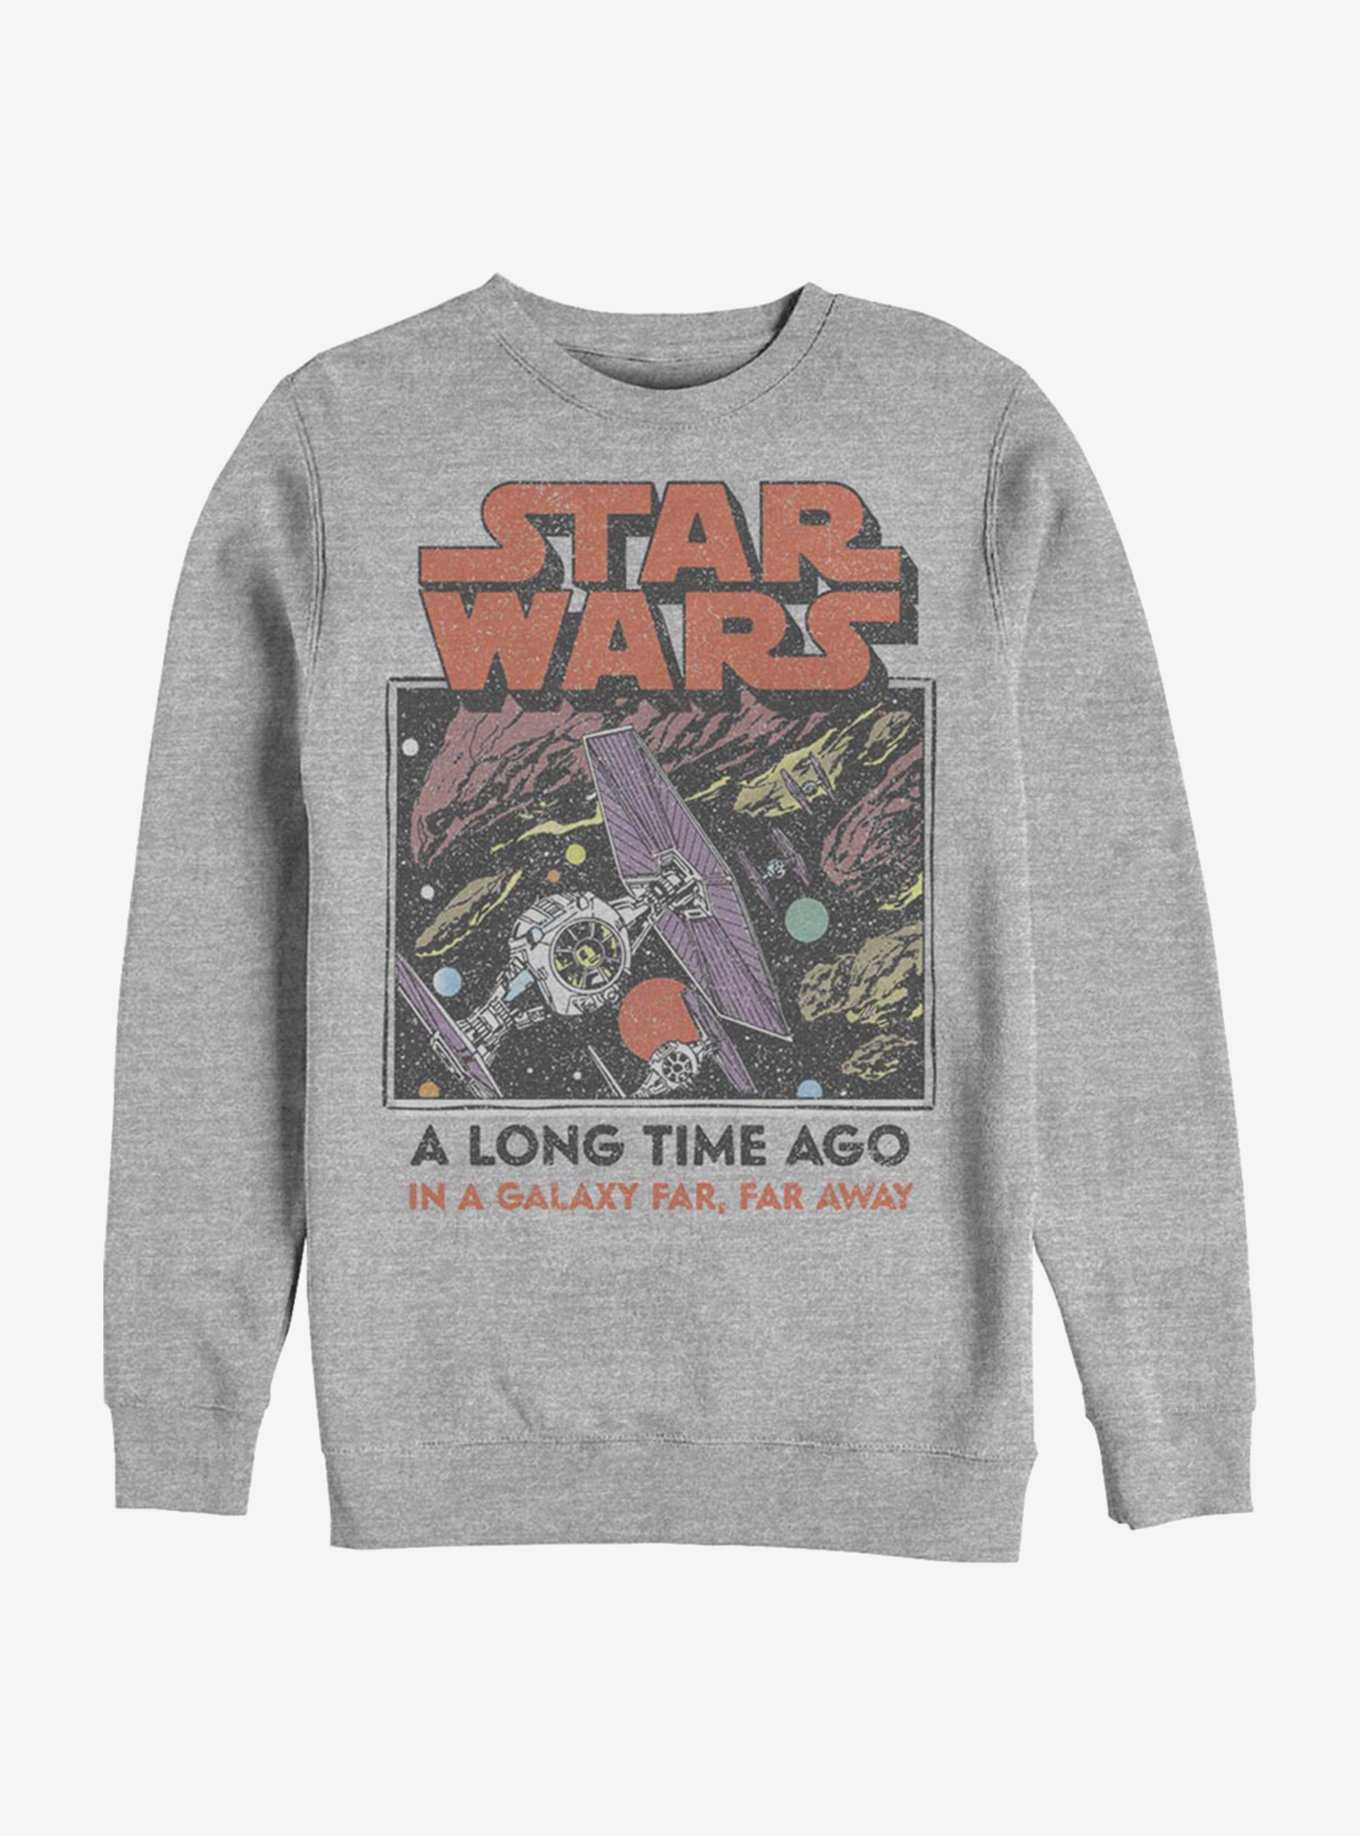 Star Wars A Long TIme Ago Crew Sweatshirt, , hi-res